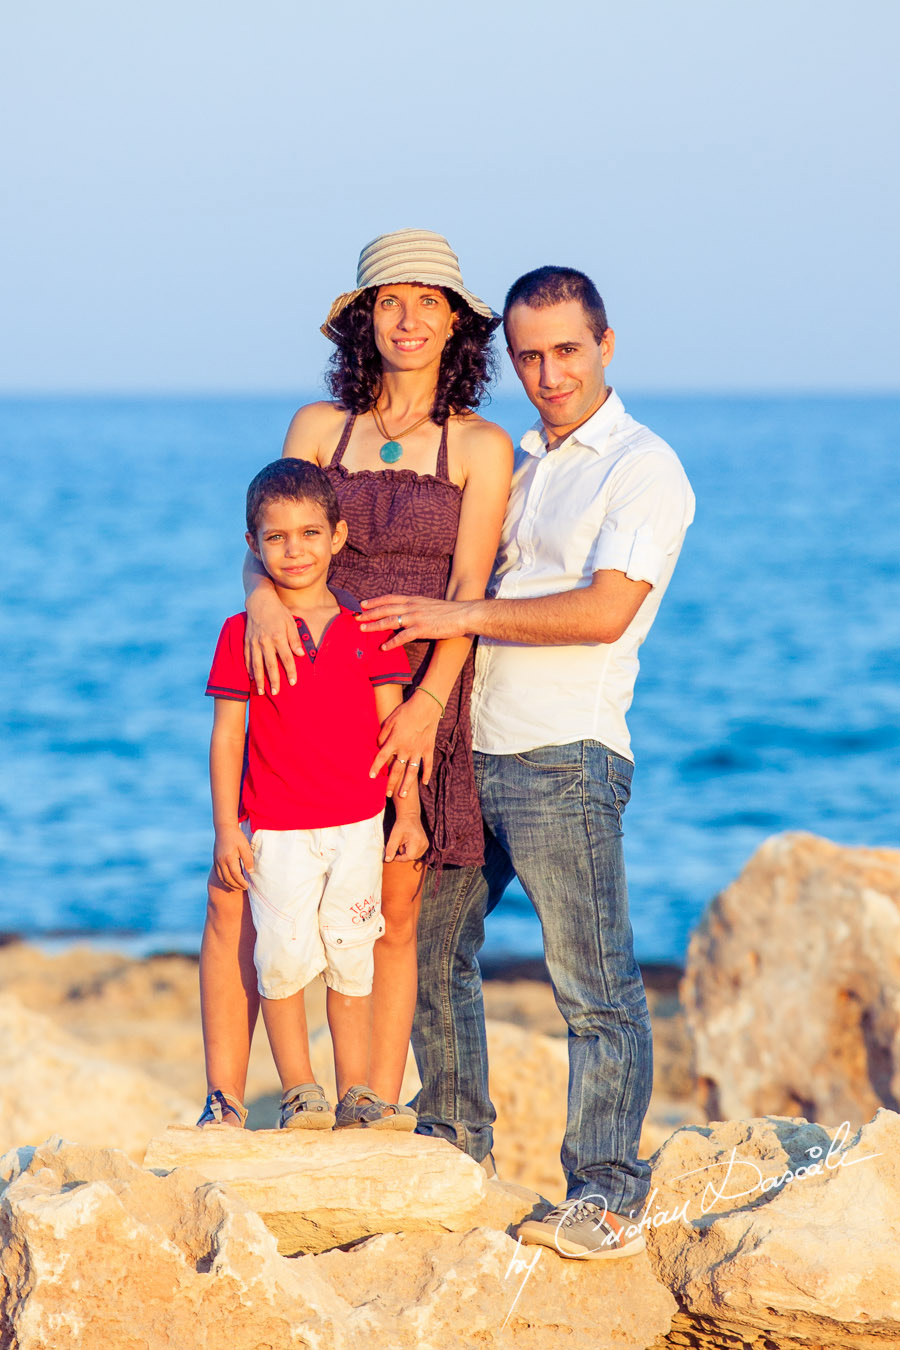 Family Beach Photo Shoot in Cyprus. Photographer: Cristian Dascalu